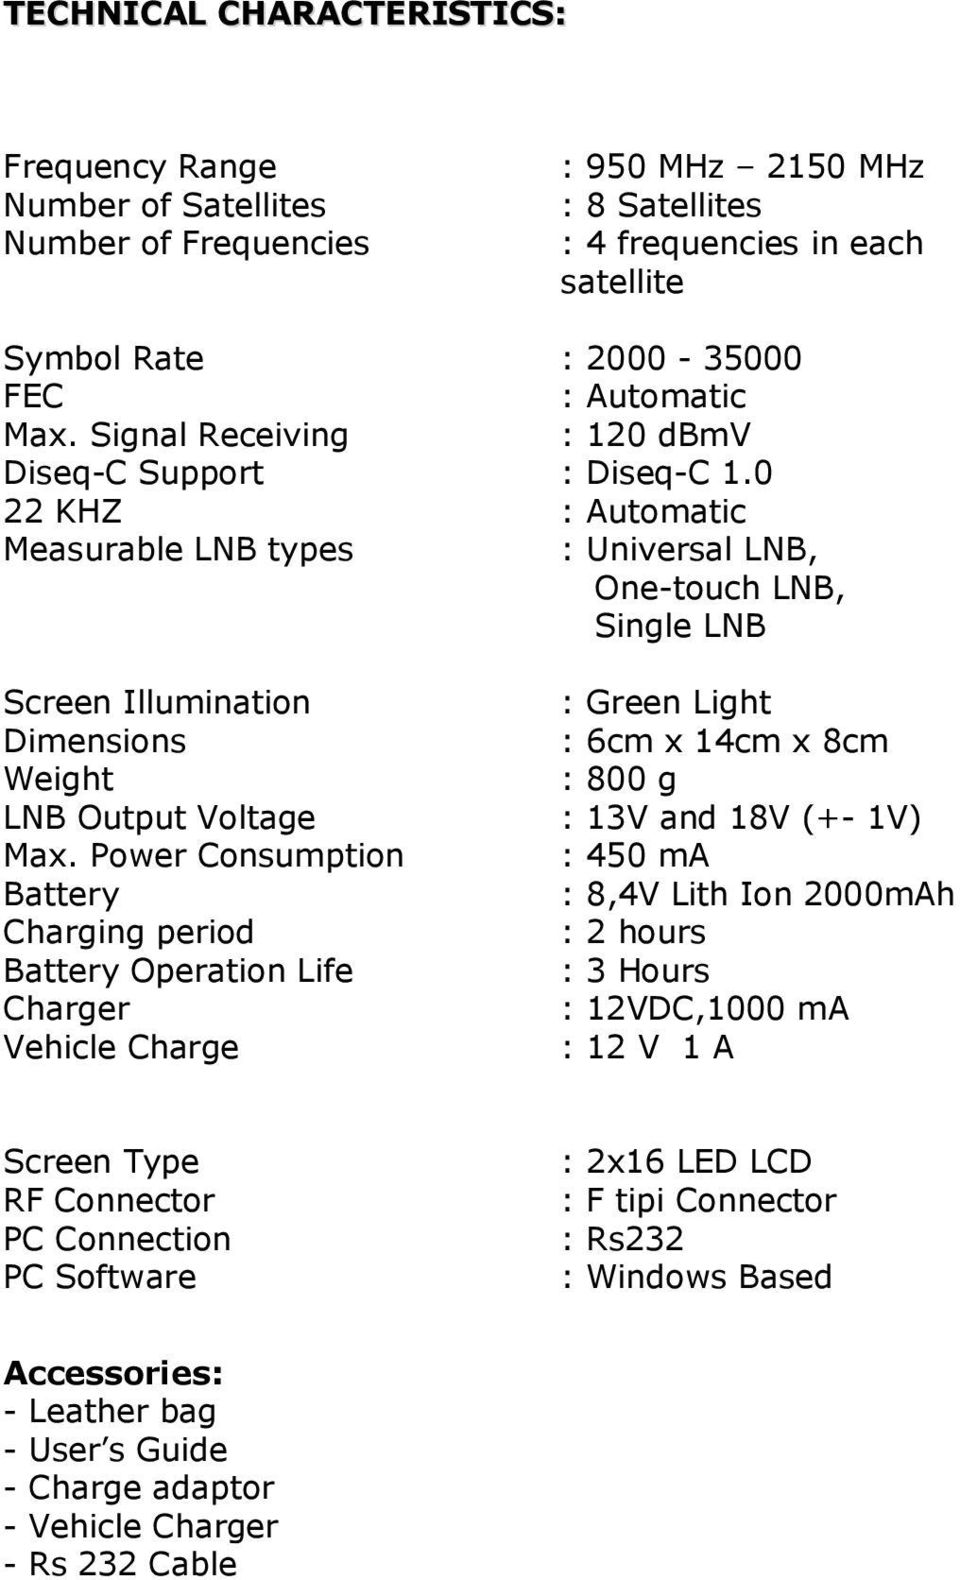 0 22 KHZ : Automatic Measurable LNB types : Universal LNB, One-touch LNB, Single LNB Screen Illumination : Green Light Dimensions : 6cm x 14cm x 8cm Weight : 800 g LNB Output Voltage : 13V and 18V